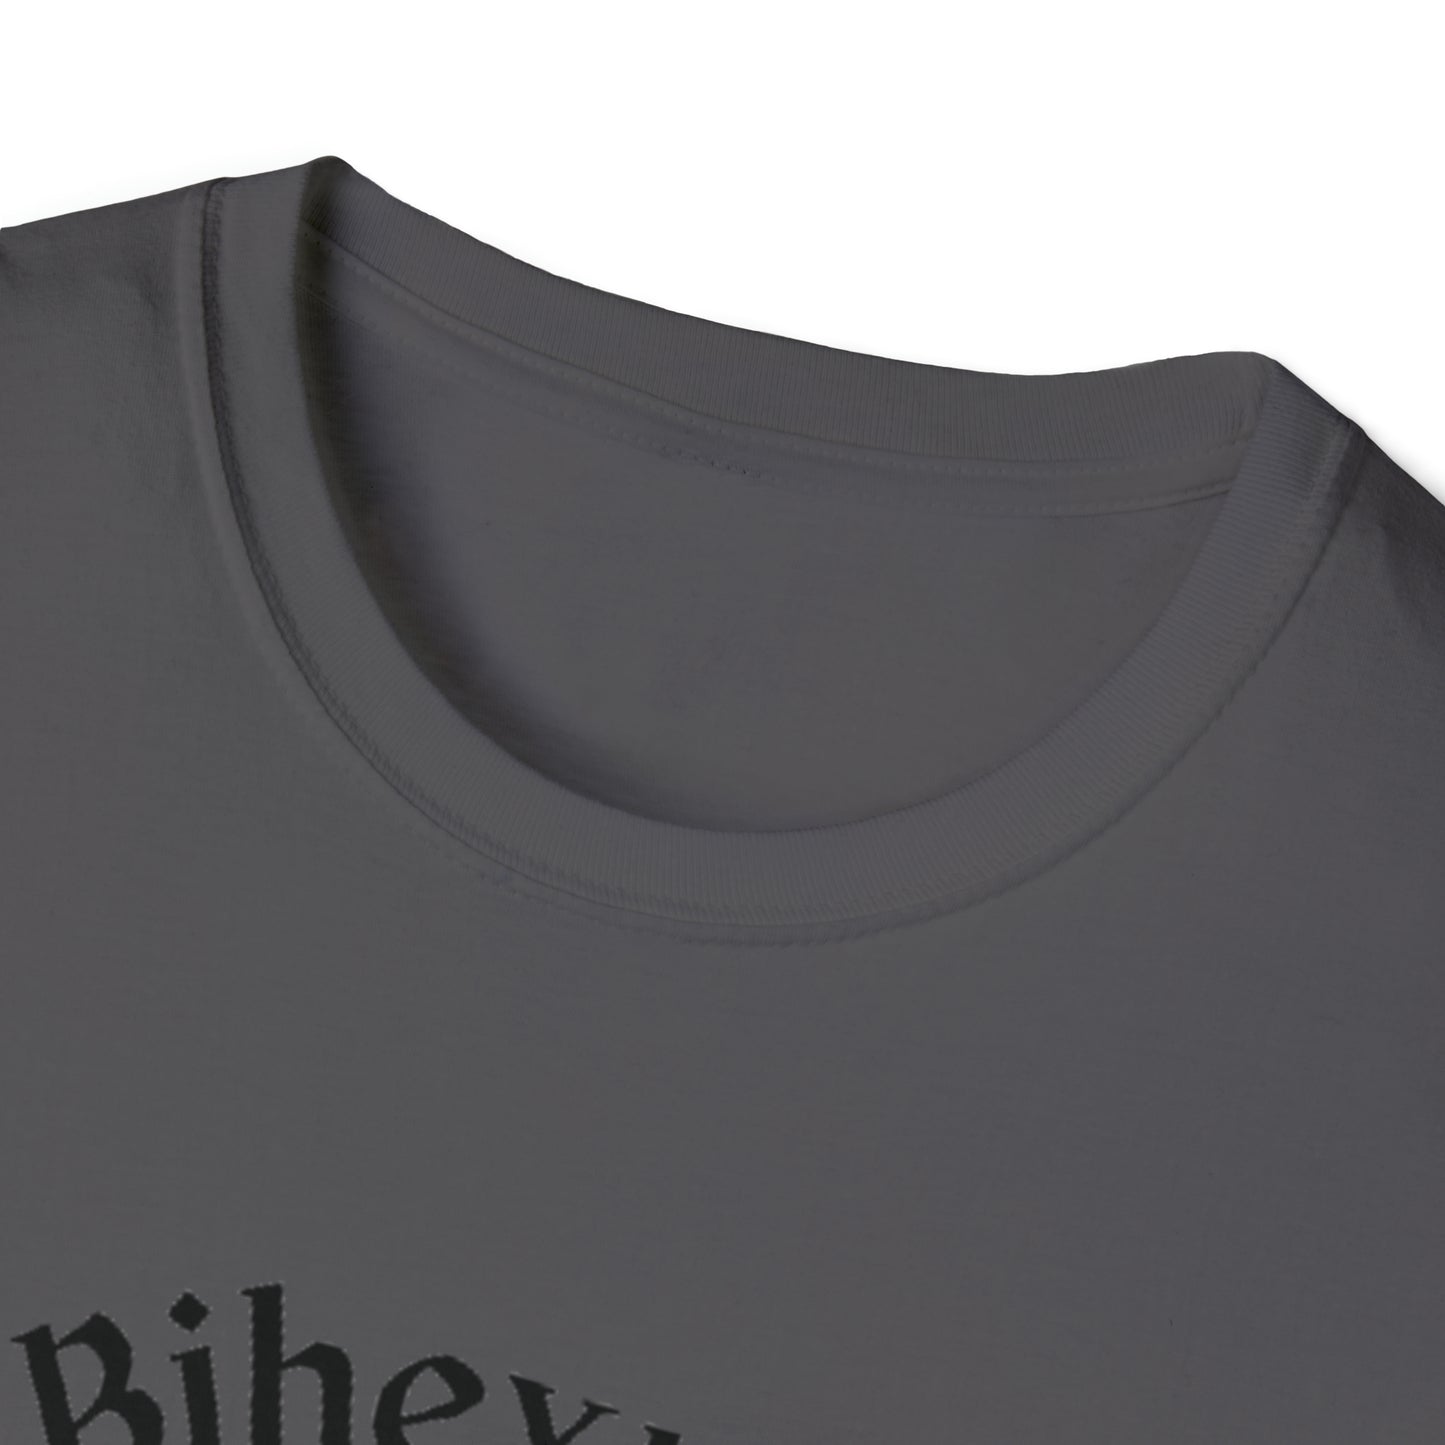 Bihexual Witch Unisex Softstyle T-Shirt